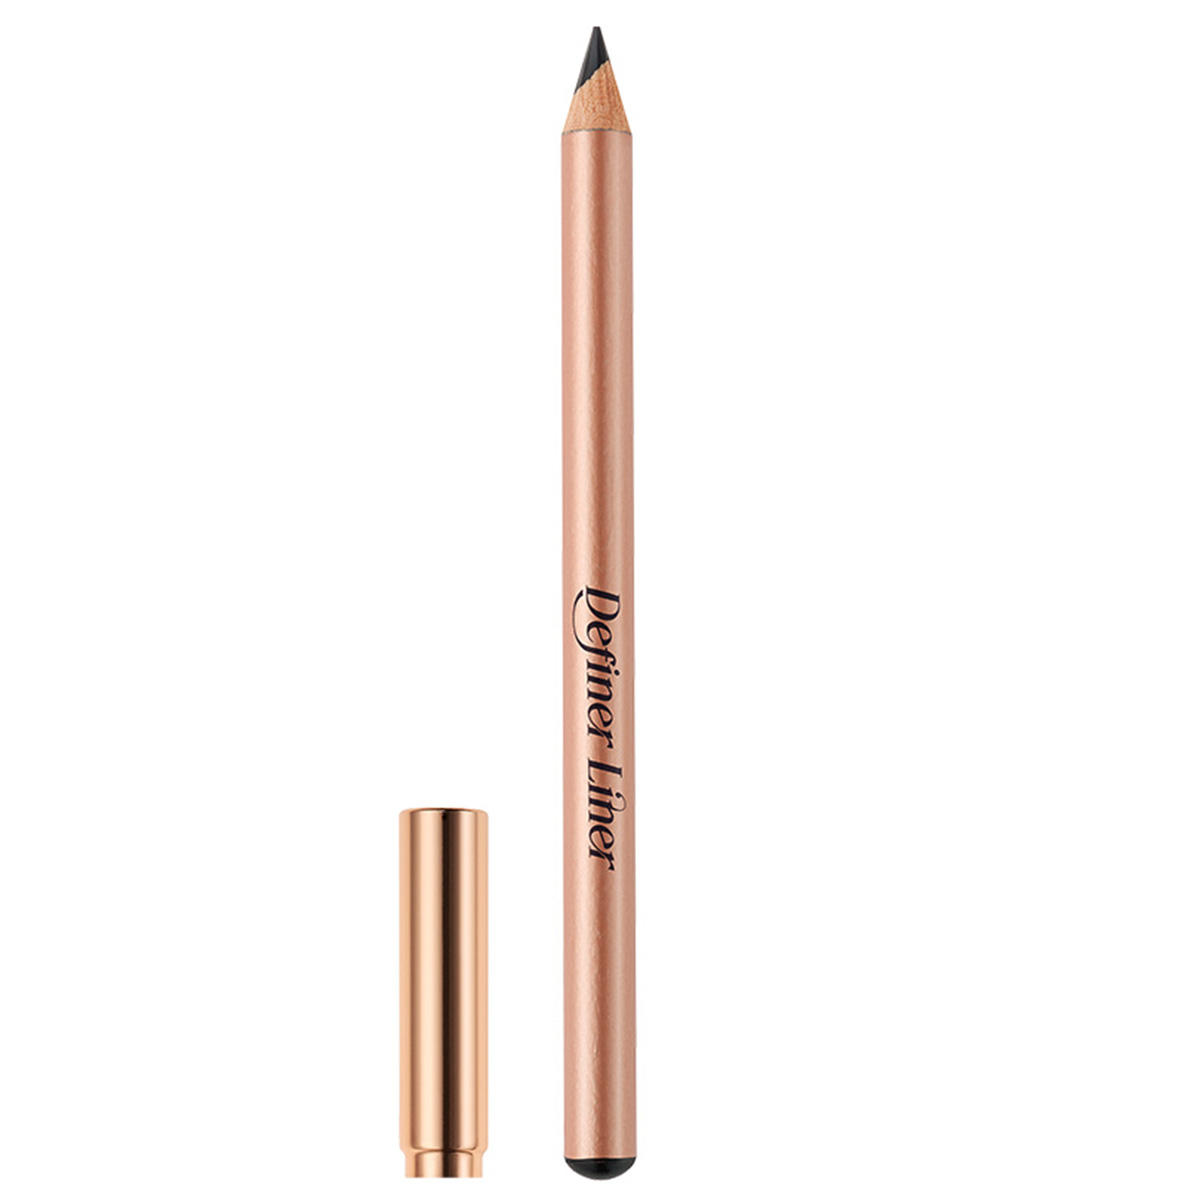 zoeva definer liner kohl eyeliner pencil mattes tiefschwarz 1,14 g nero profondo opaco